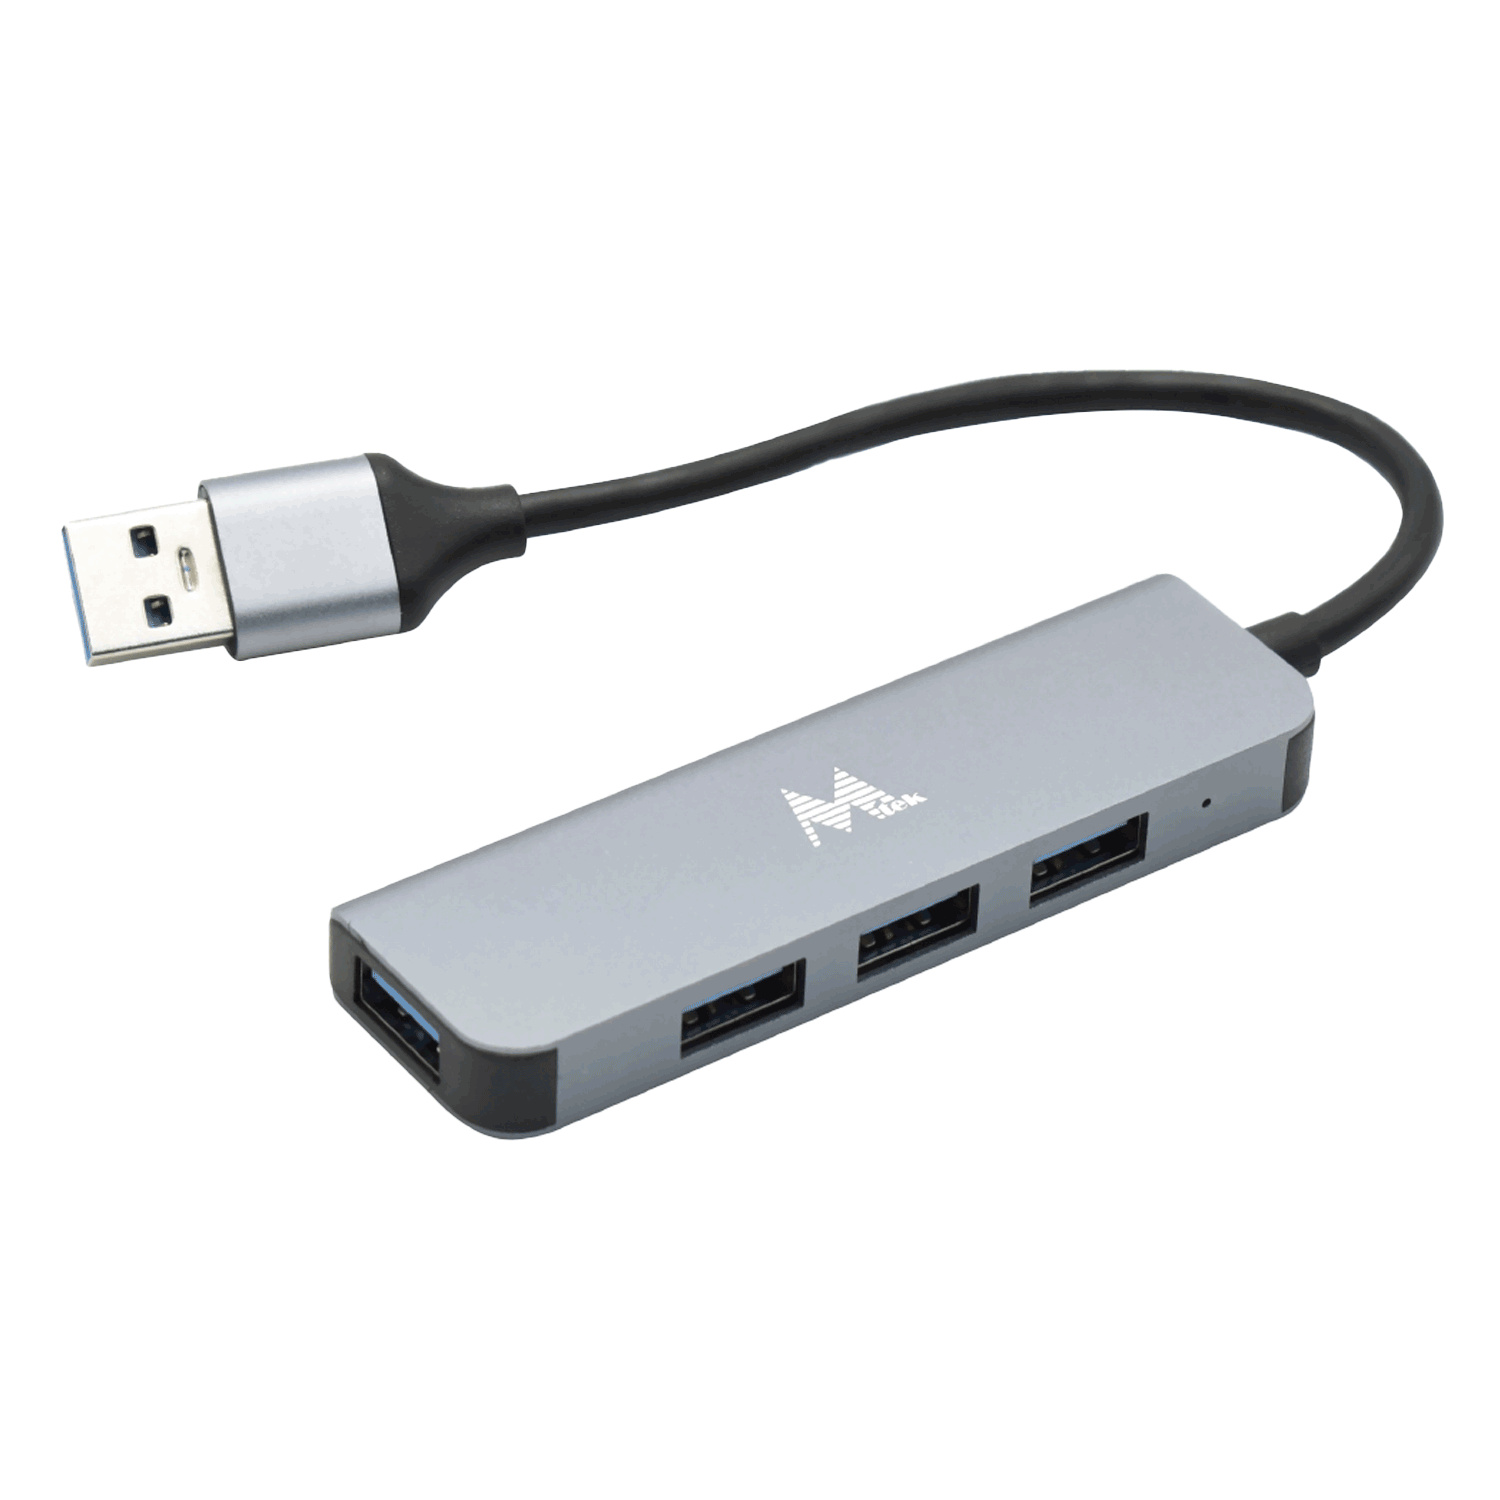 Hub MTEK HB-403 / 4 Portas / USB 3.0 - Alumino Cinza